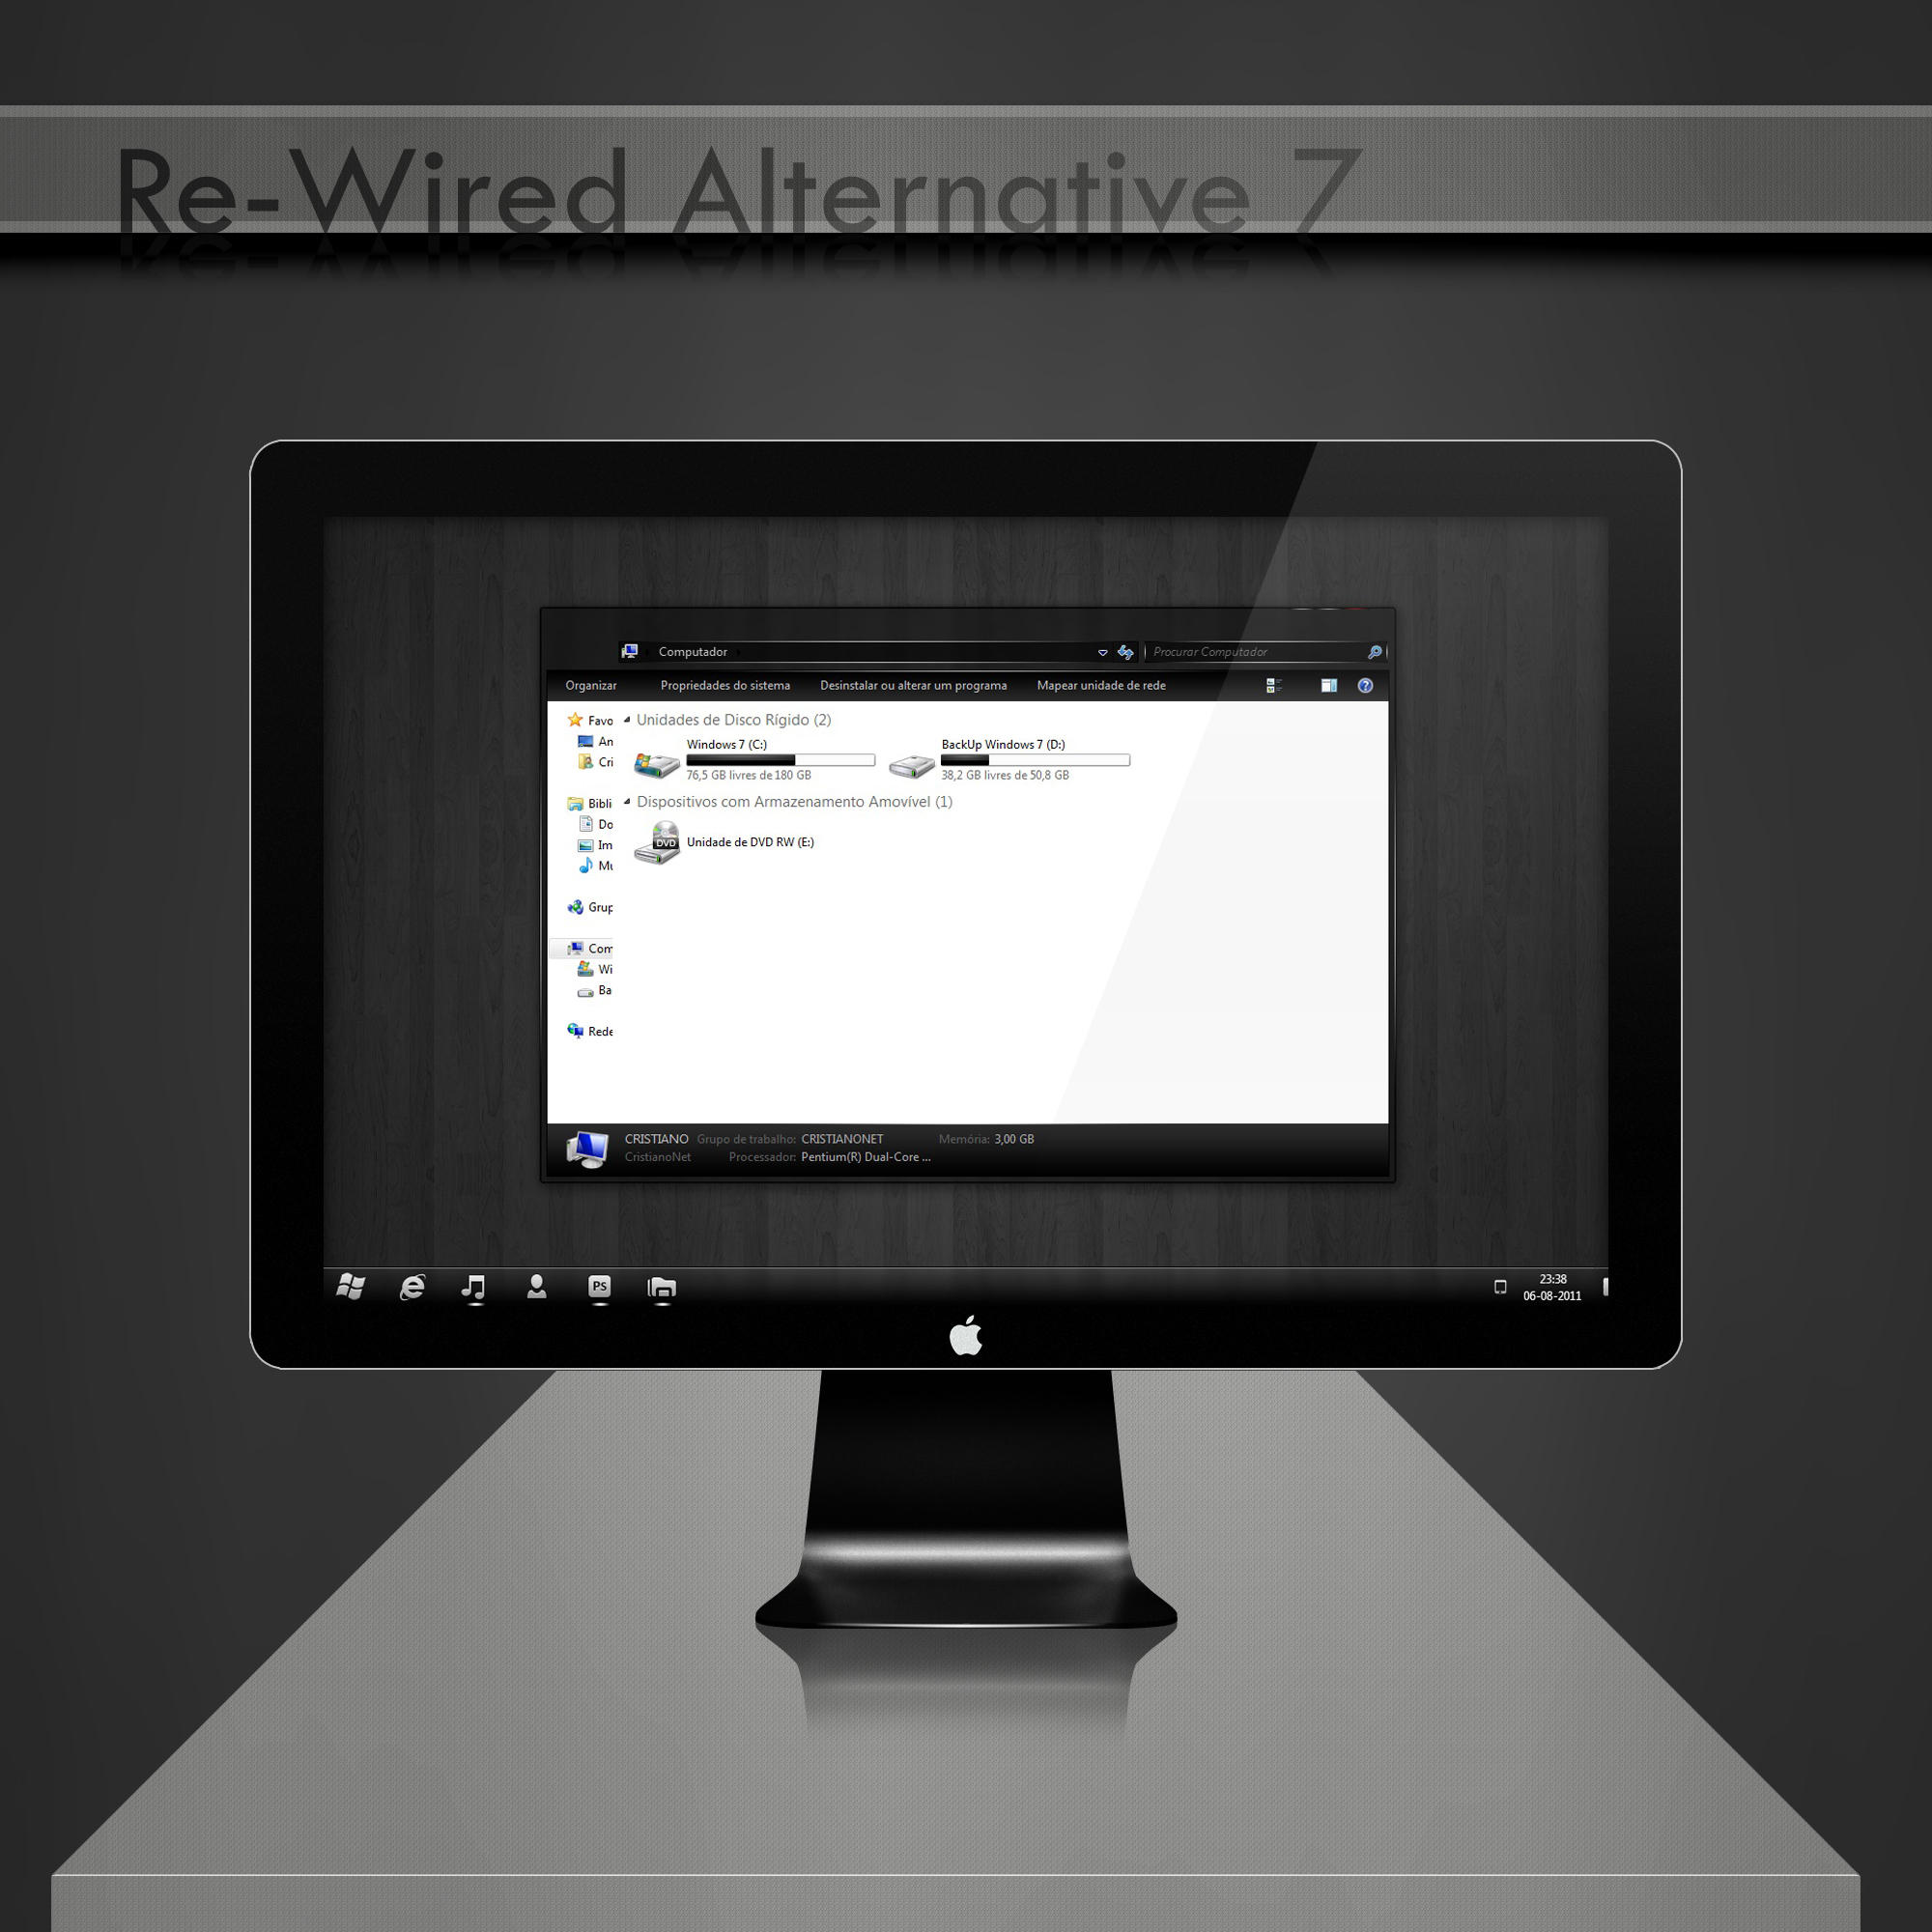 activex download for windows 7 microsoft